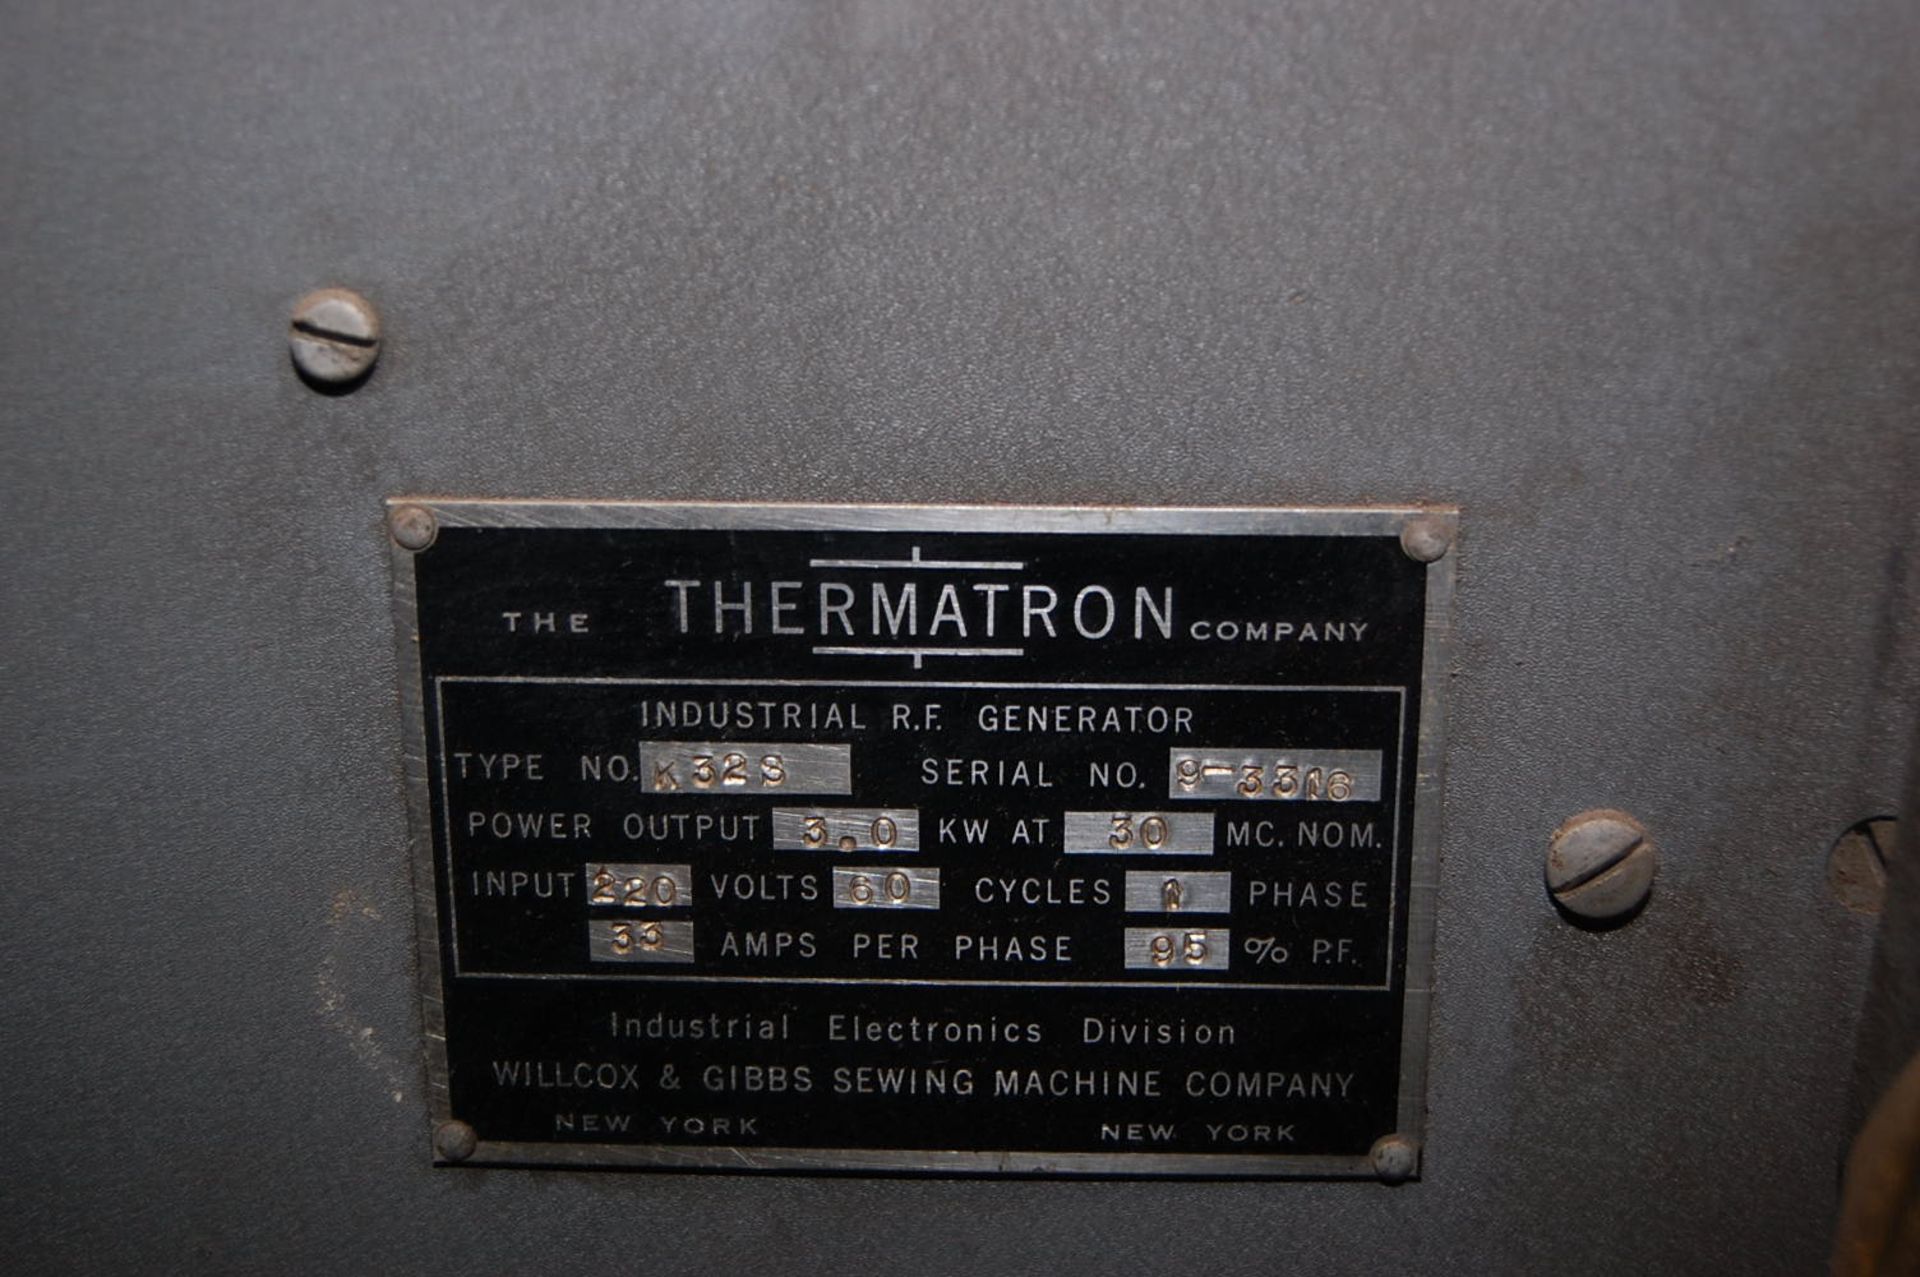 Thermatron Type #K325 Welder/RF Generator, SN 9-3316 - Image 2 of 2